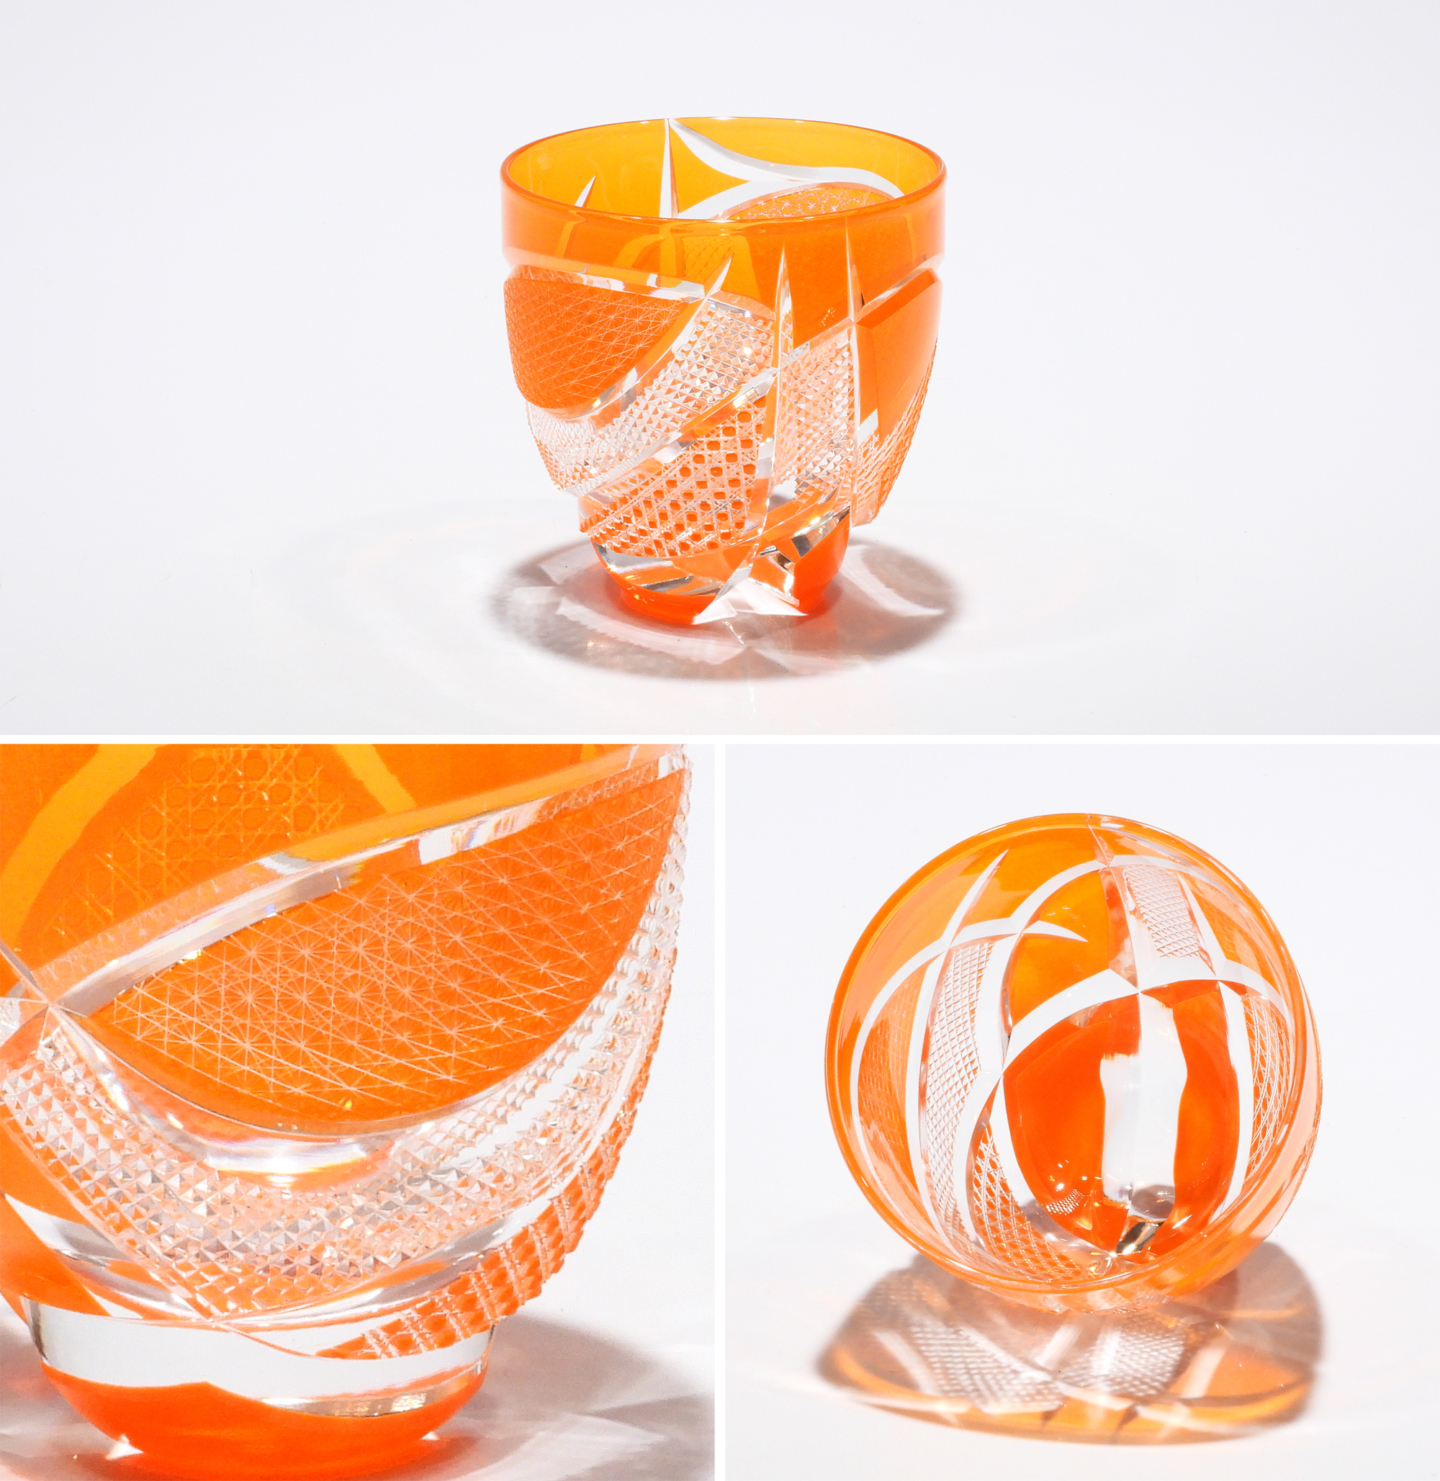 [Hanashyo]Online Edo Kiriko glassware store, where the perfect gift selection awaits